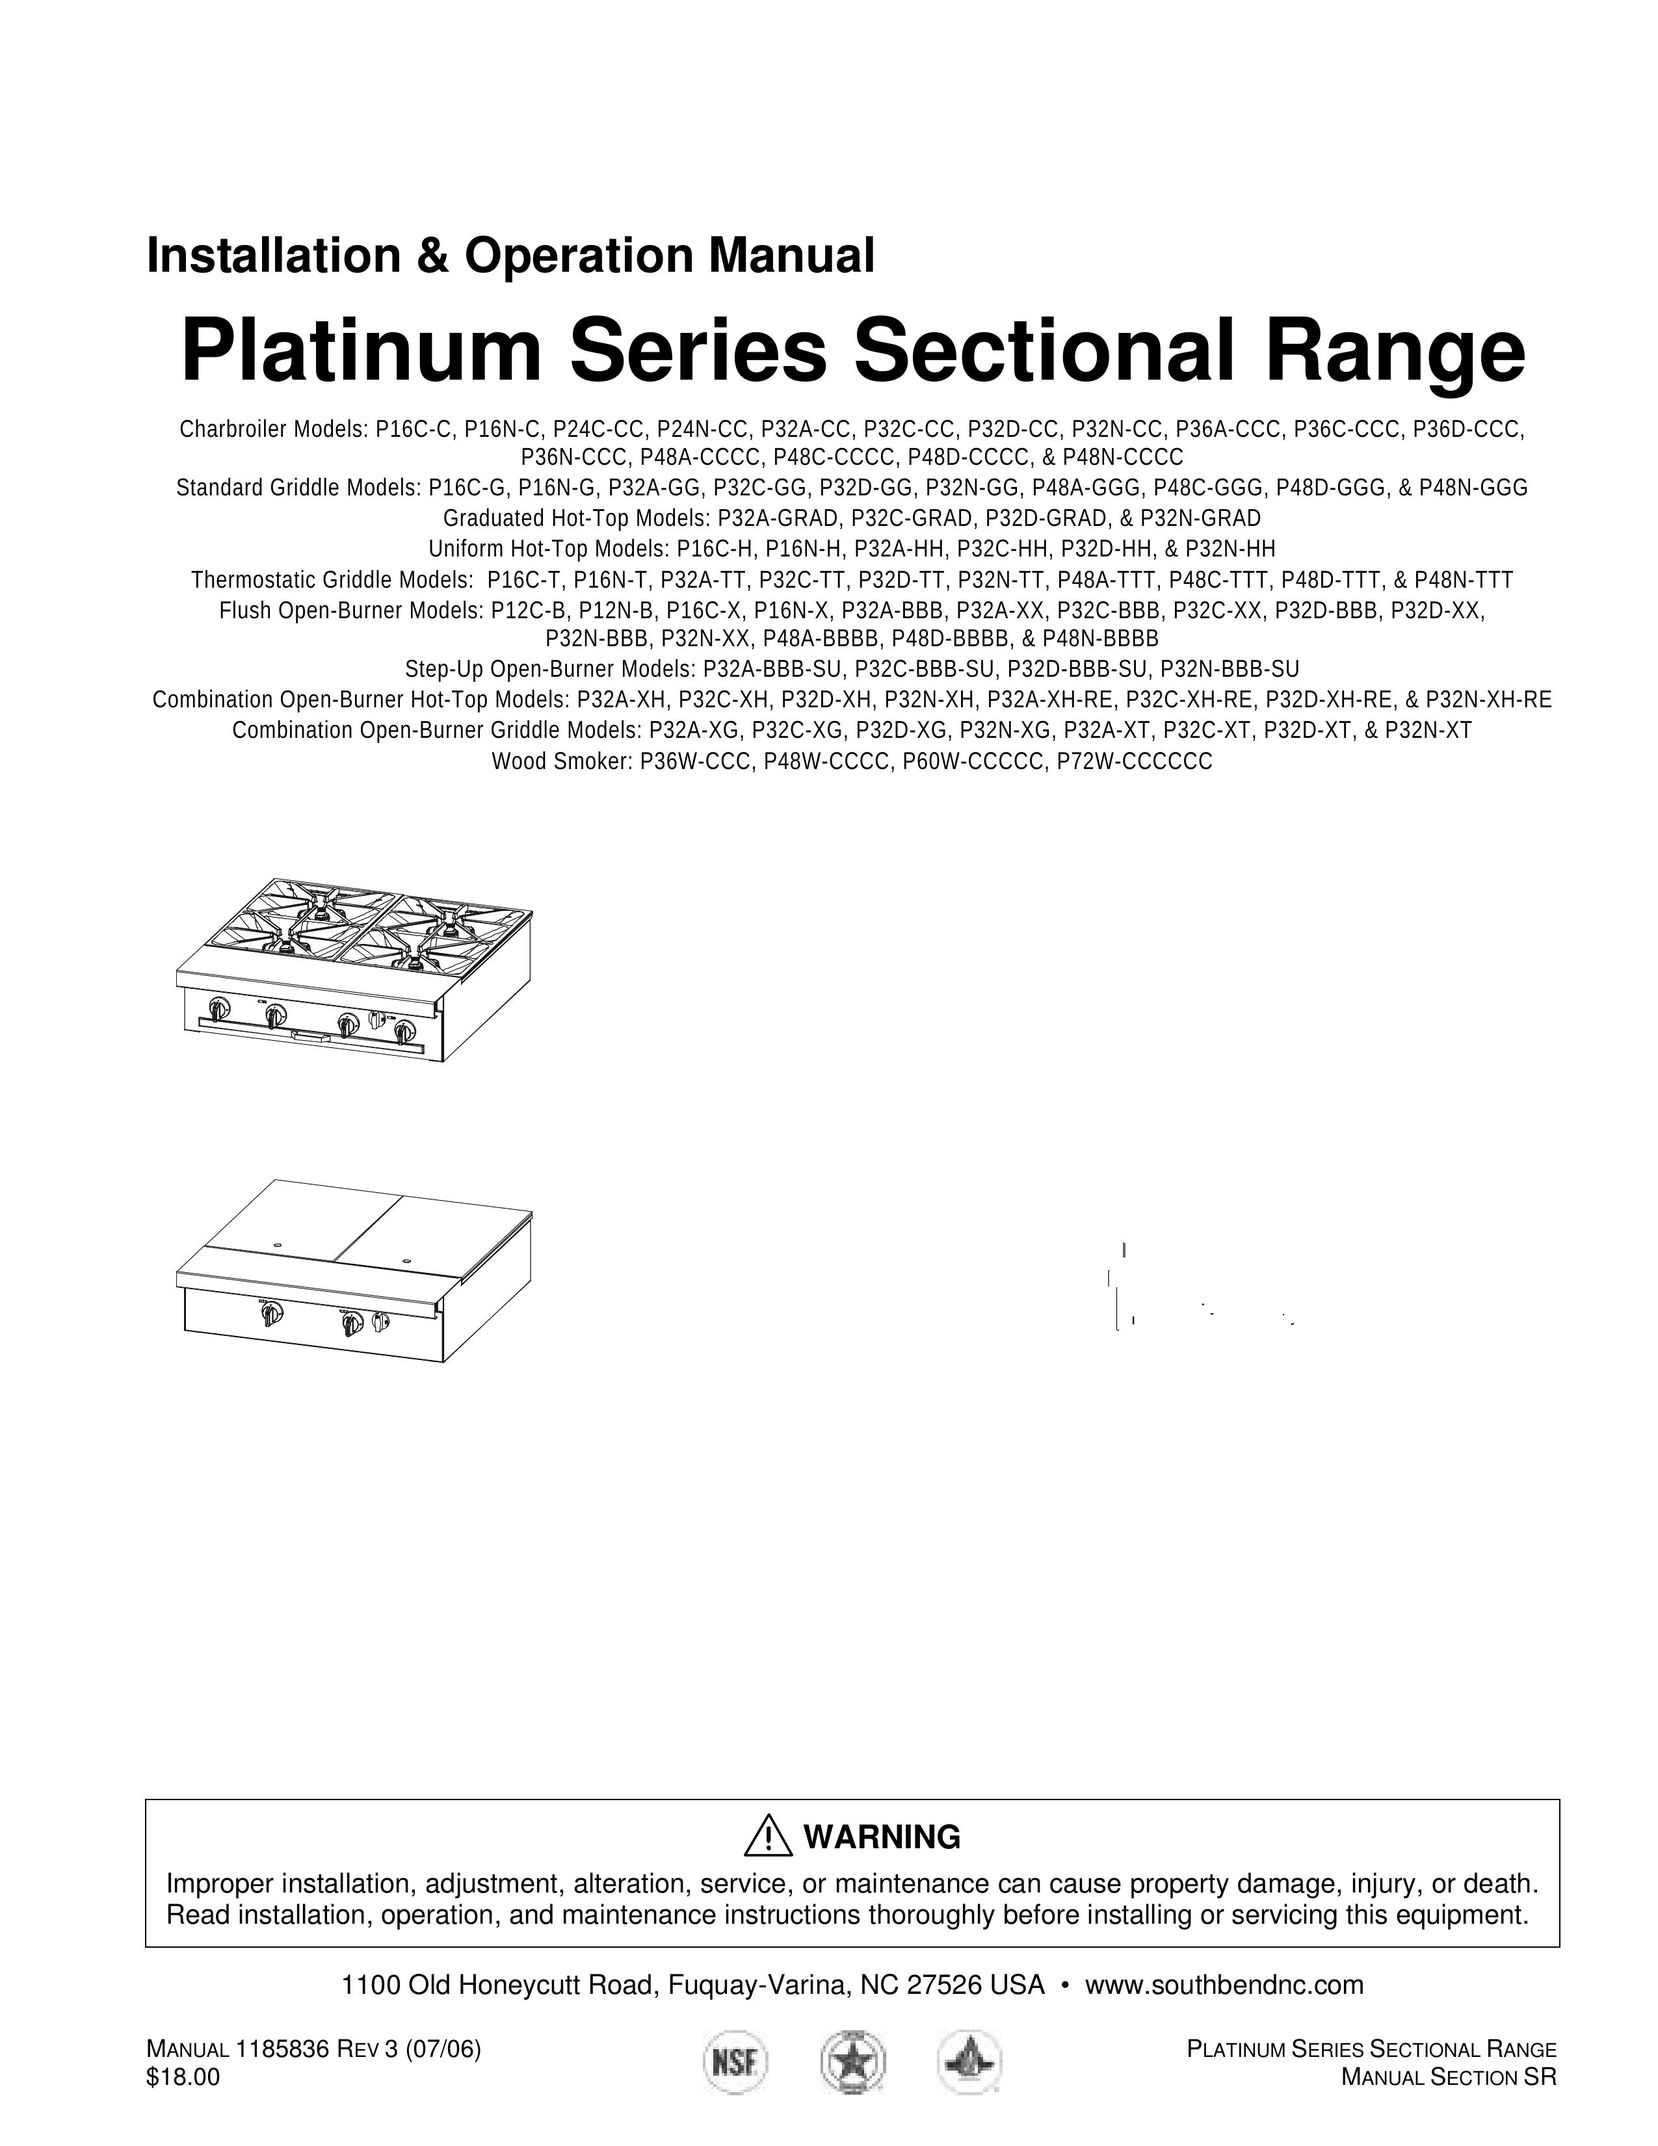 Southbend P16C-C Range User Manual